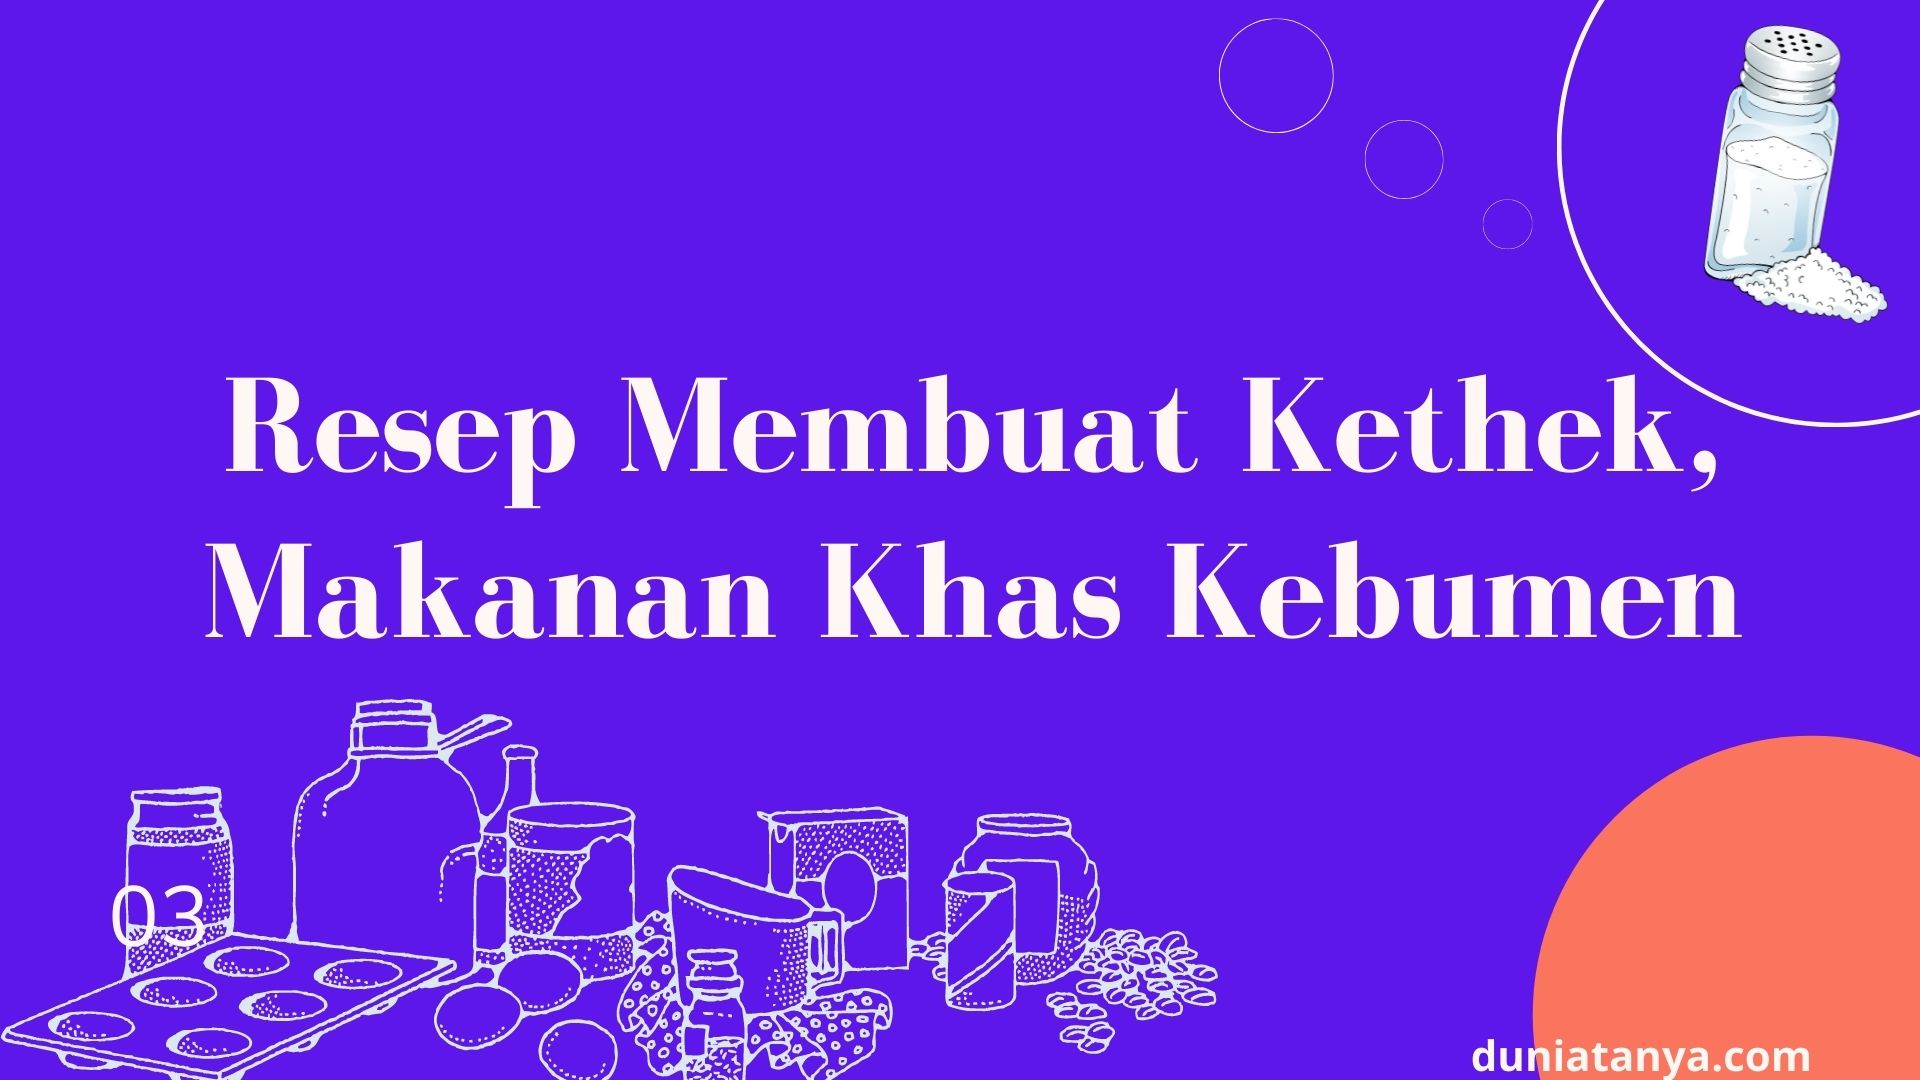 You are currently viewing Resep Membuat Kethek,Makanan Khas Kebumen